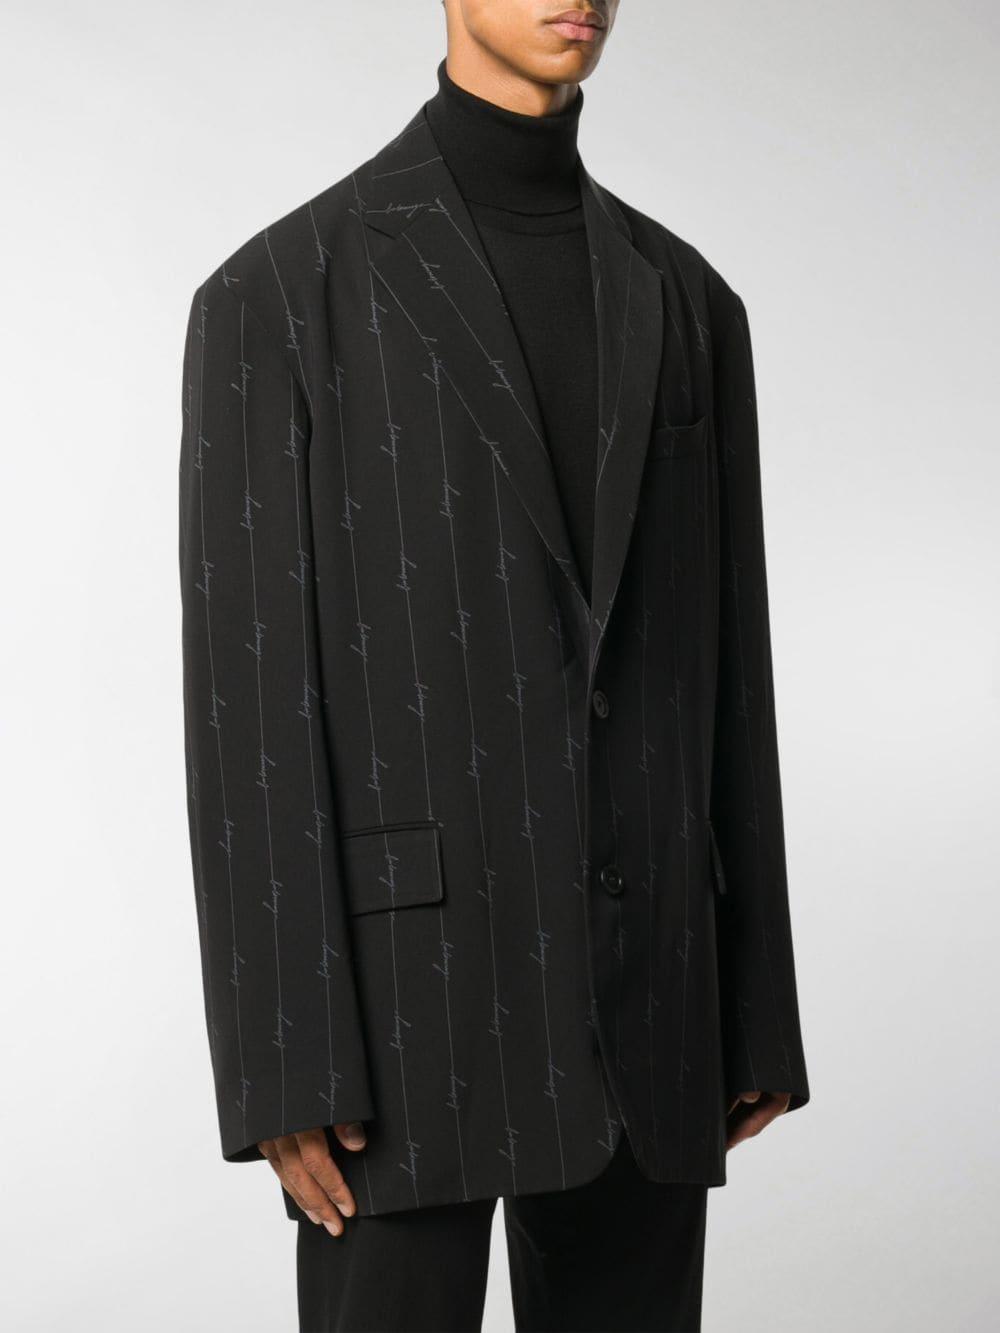 Balenciaga Logo Print Blazer in Black for Men - Lyst